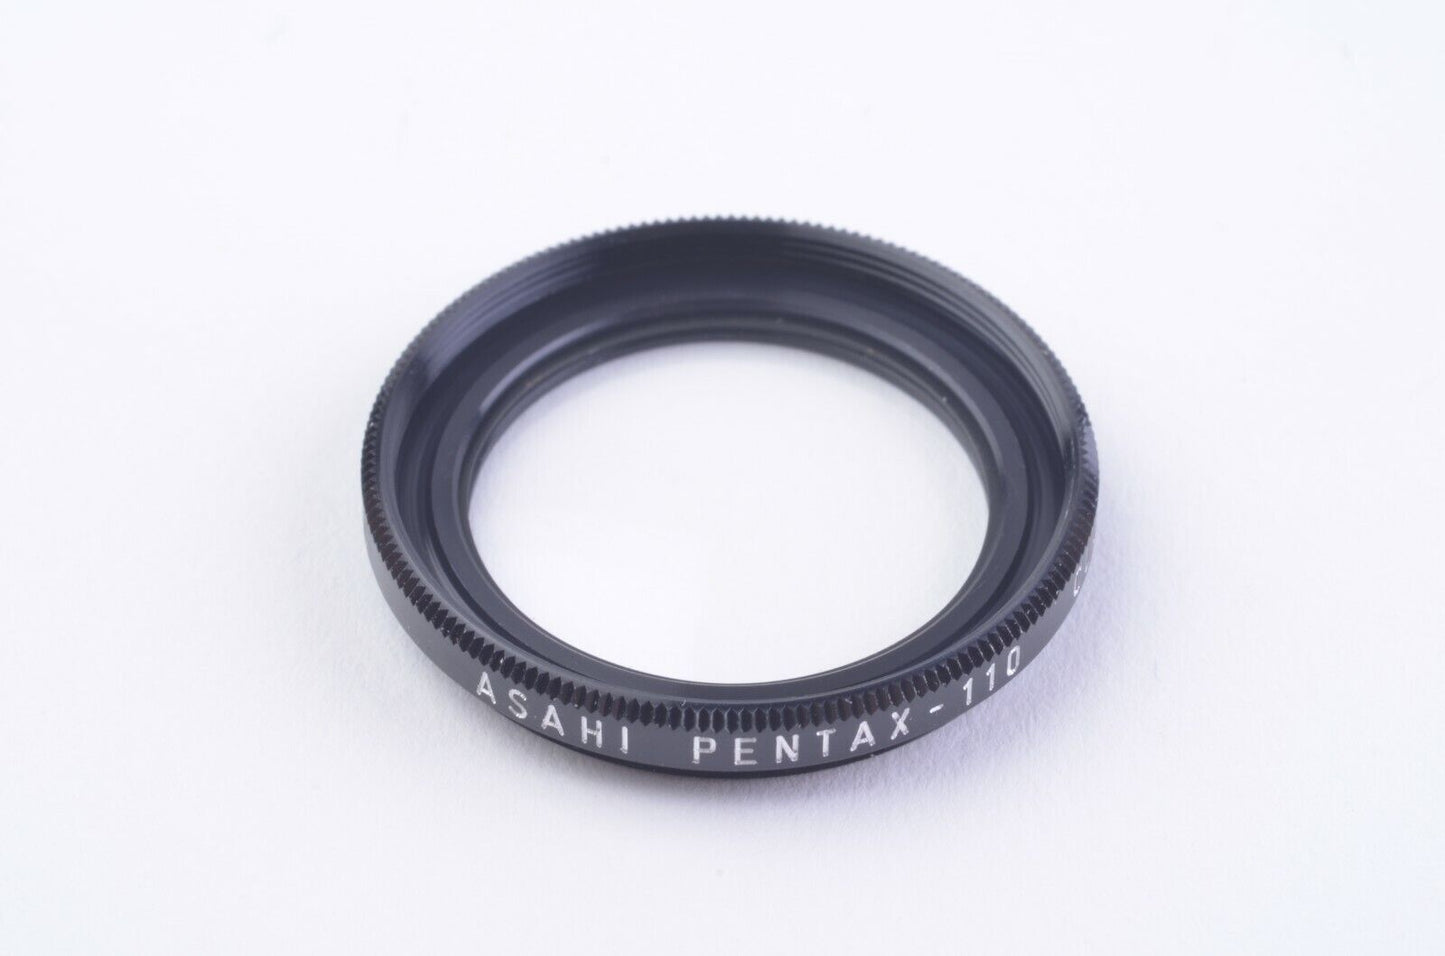 EXC++ GENUINE PENTAX-110 25.5mm S-31 CLOSE-UP FILTER IN JEWEL CASE